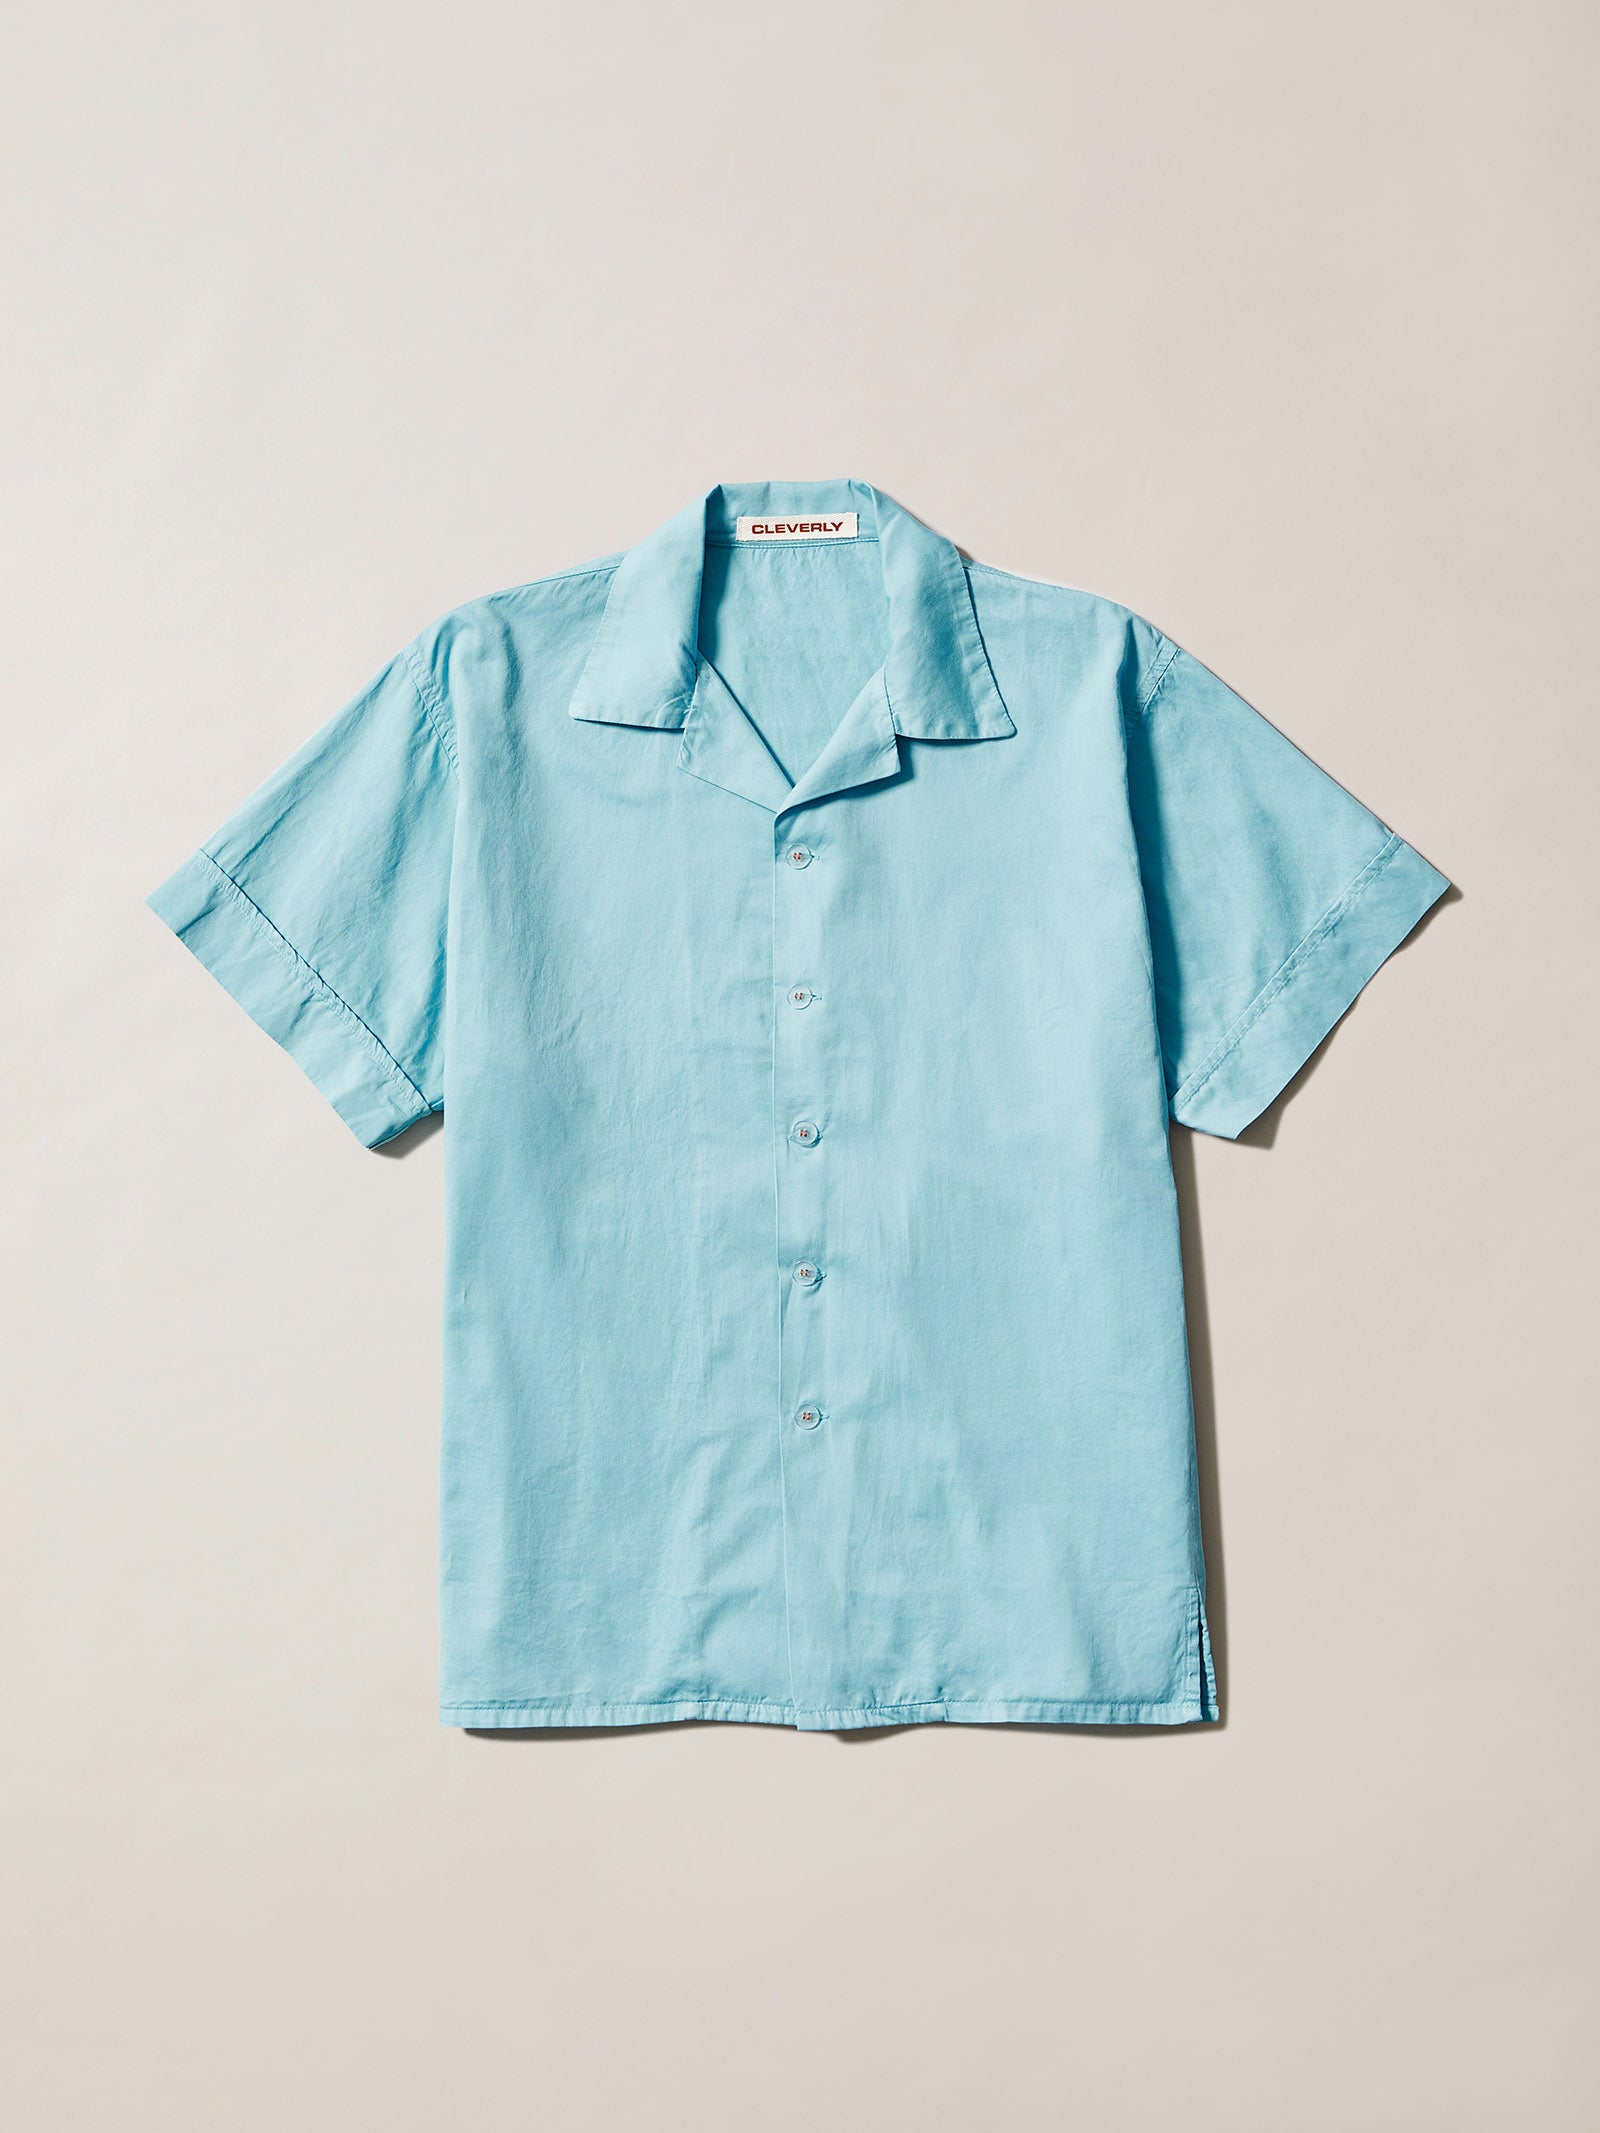 100% cotton pyjamas, soft short sleeve shirt, short sleeve pyjama shirt, blue lounge shirt